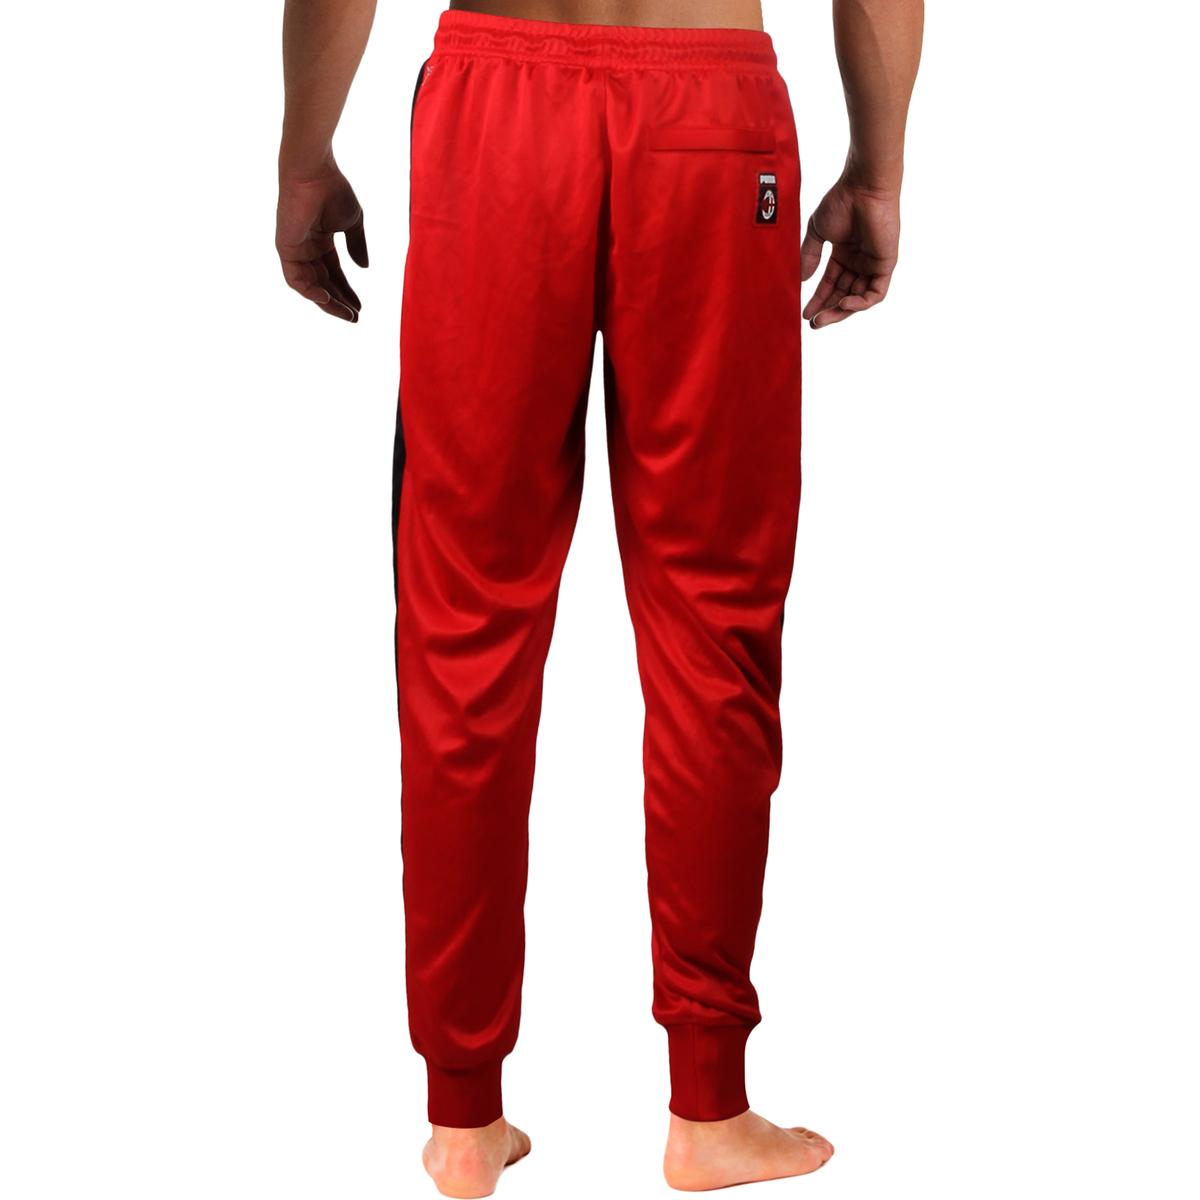 Puma Mens Red Tech Fitness Running Pants Athletic L BHFO 2168 | eBay